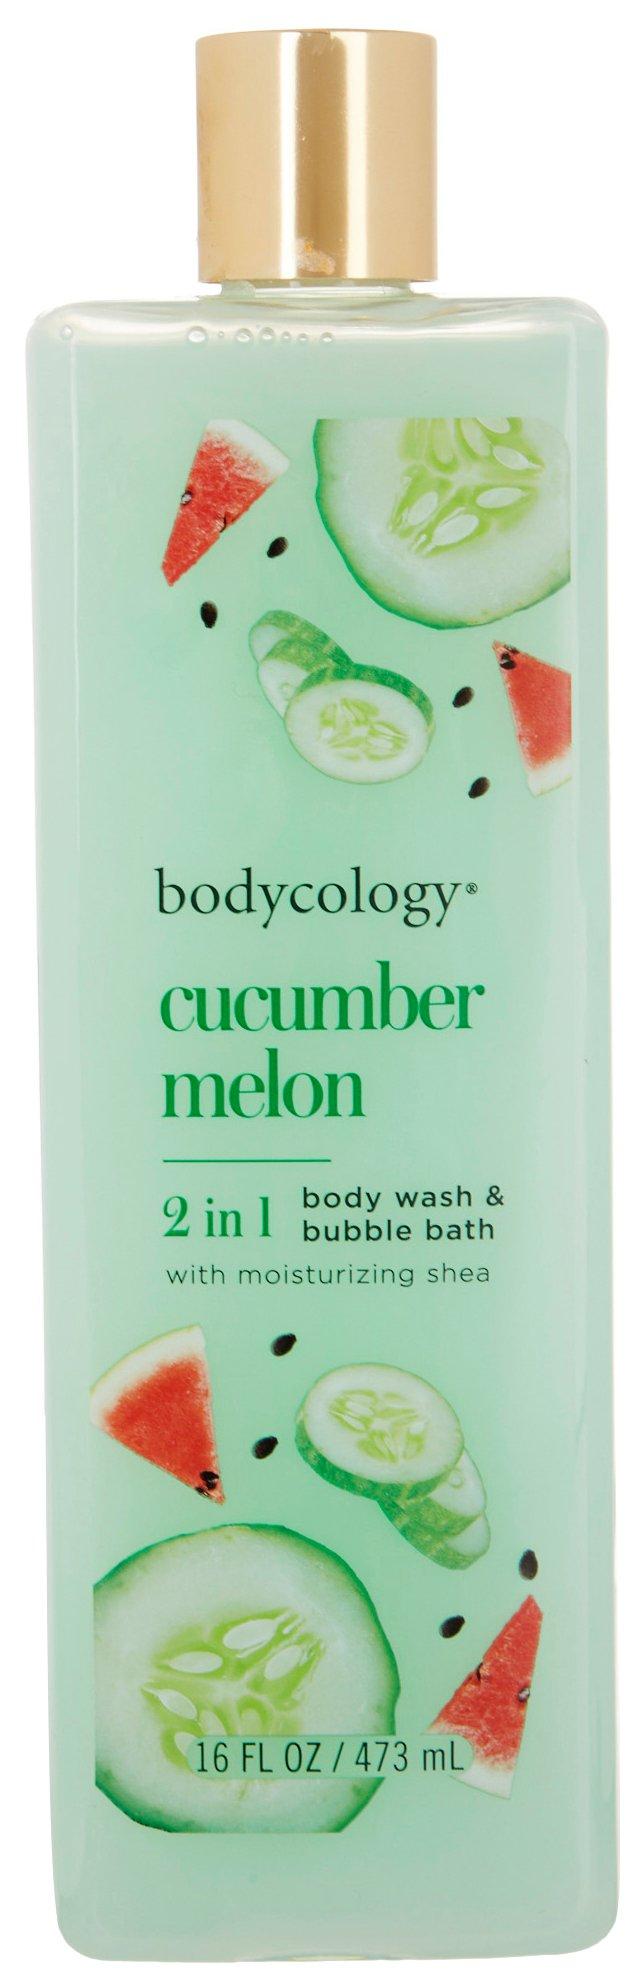 Cucumber Melon Body Wash & Bubble Bath 16 oz.